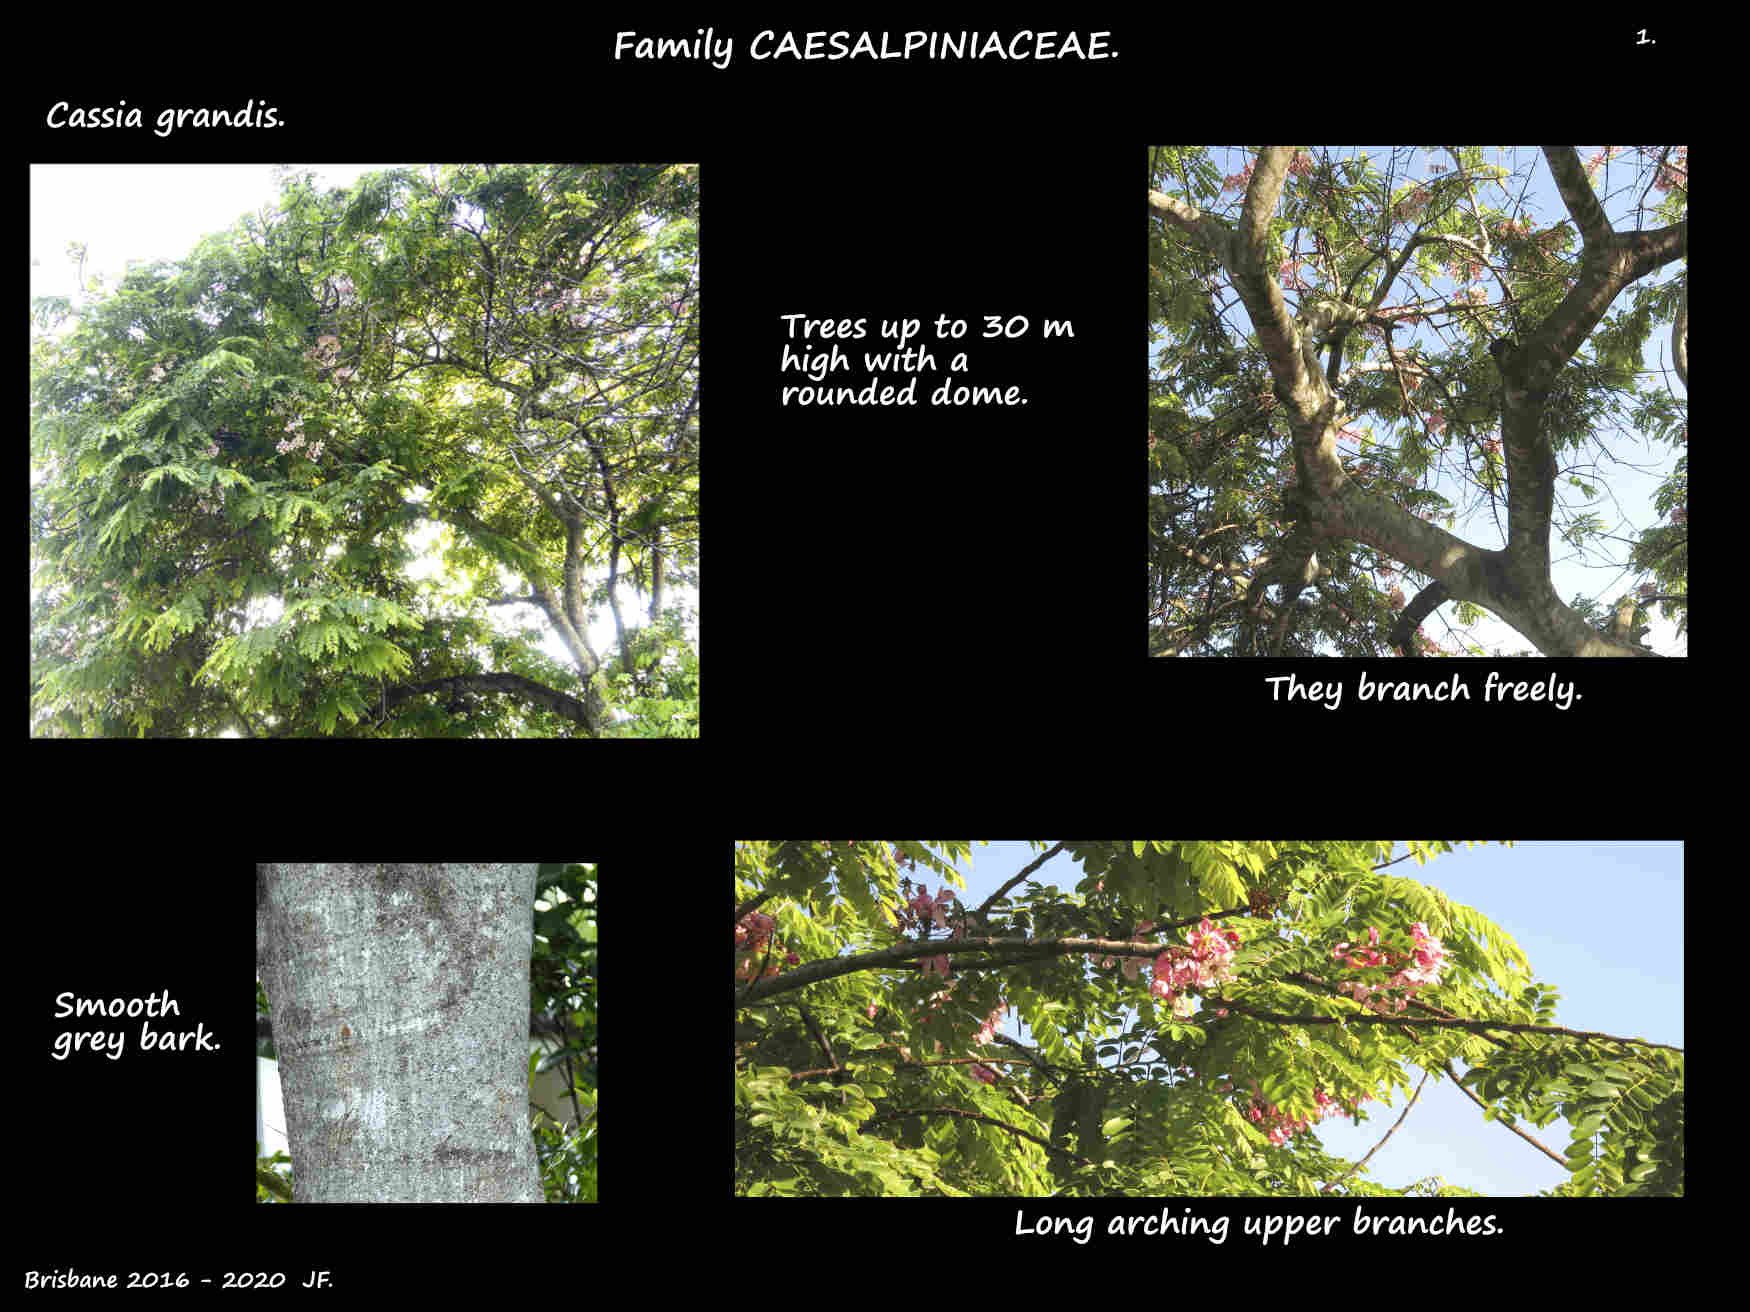 1 Cassia grandis tree & trunk